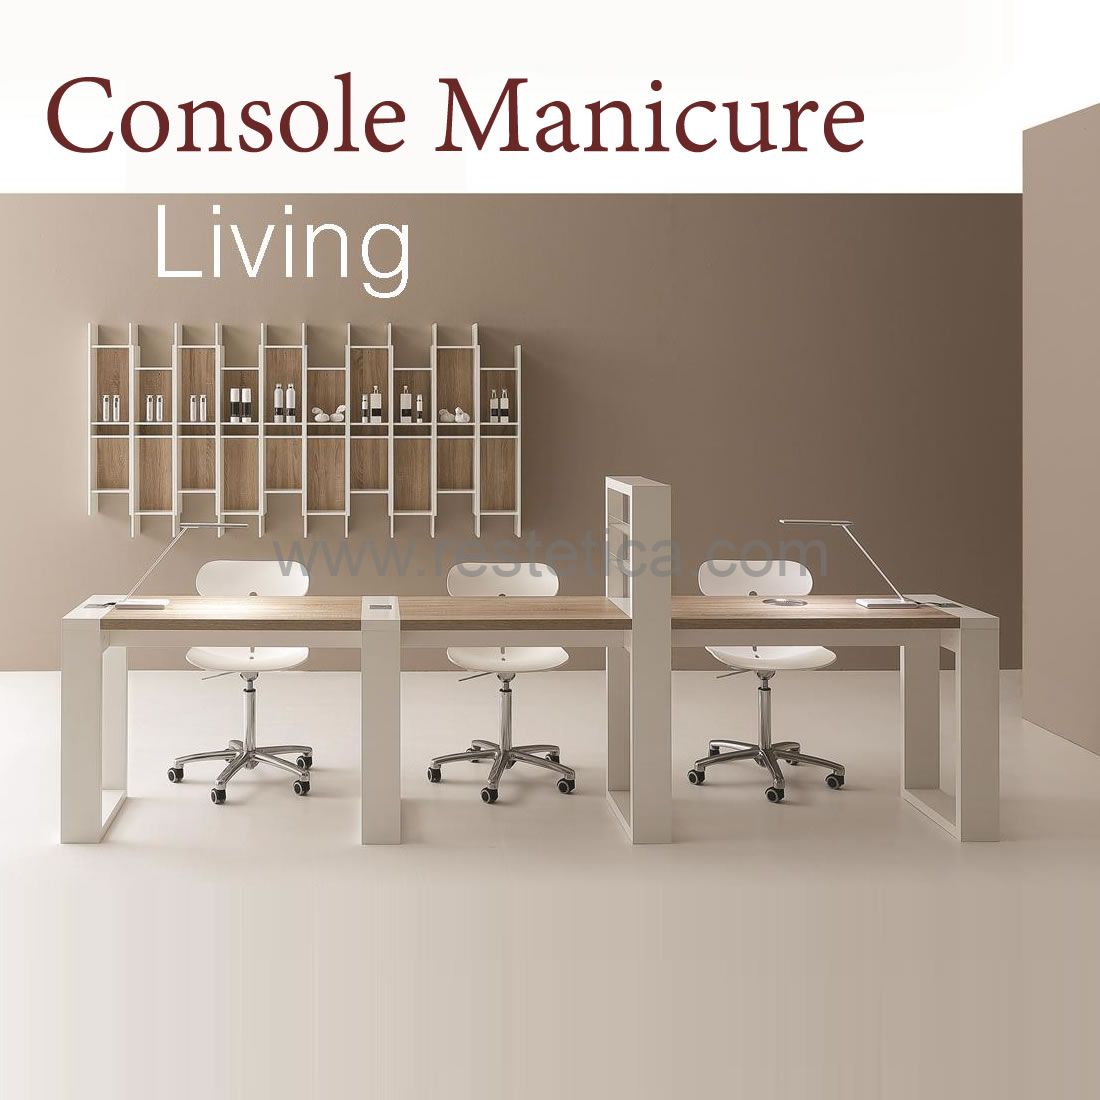 Console Manicure Living full optinal by Vismara